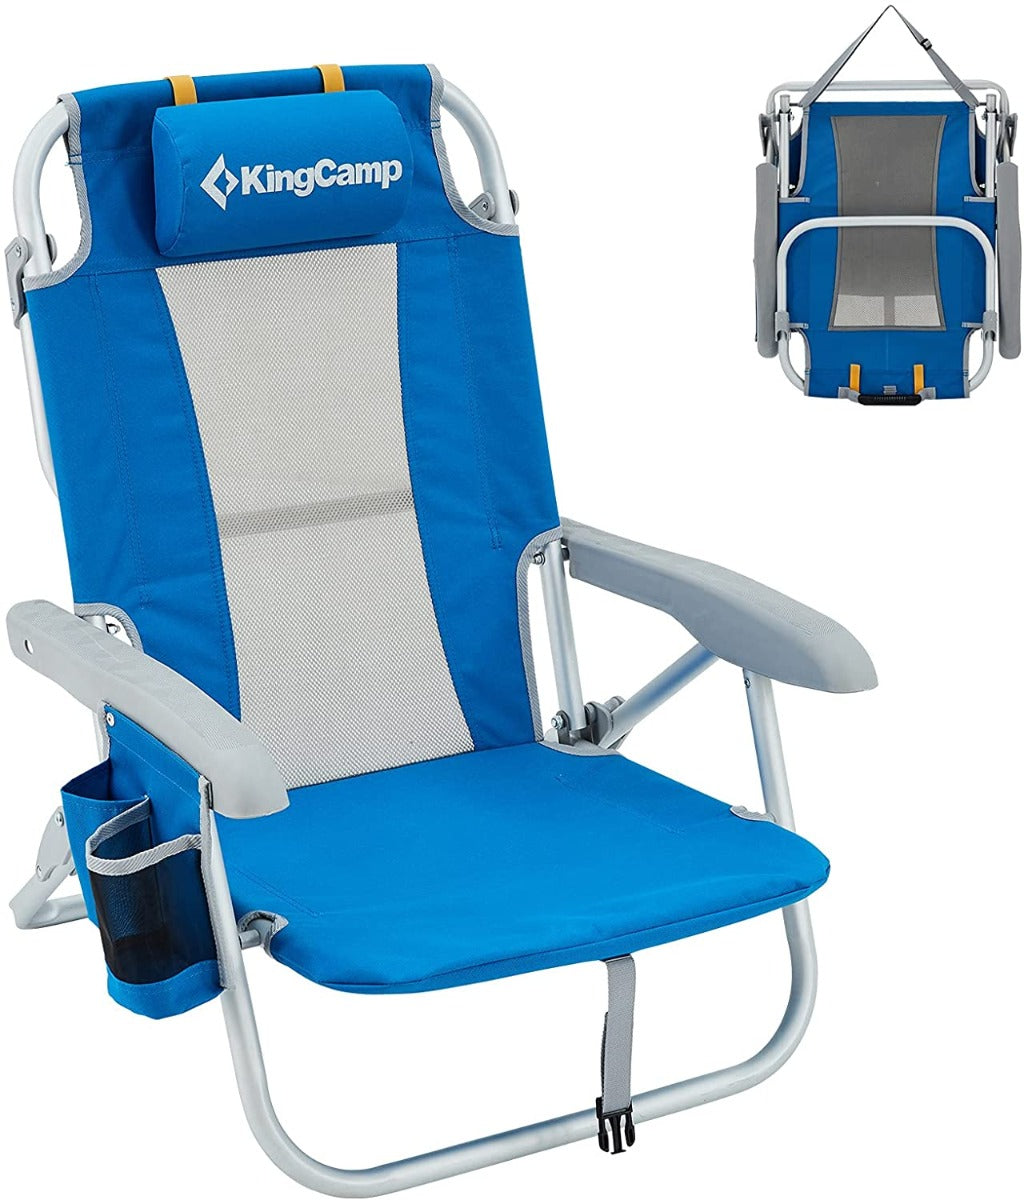 KingCamp Stable Folding Beach Chair